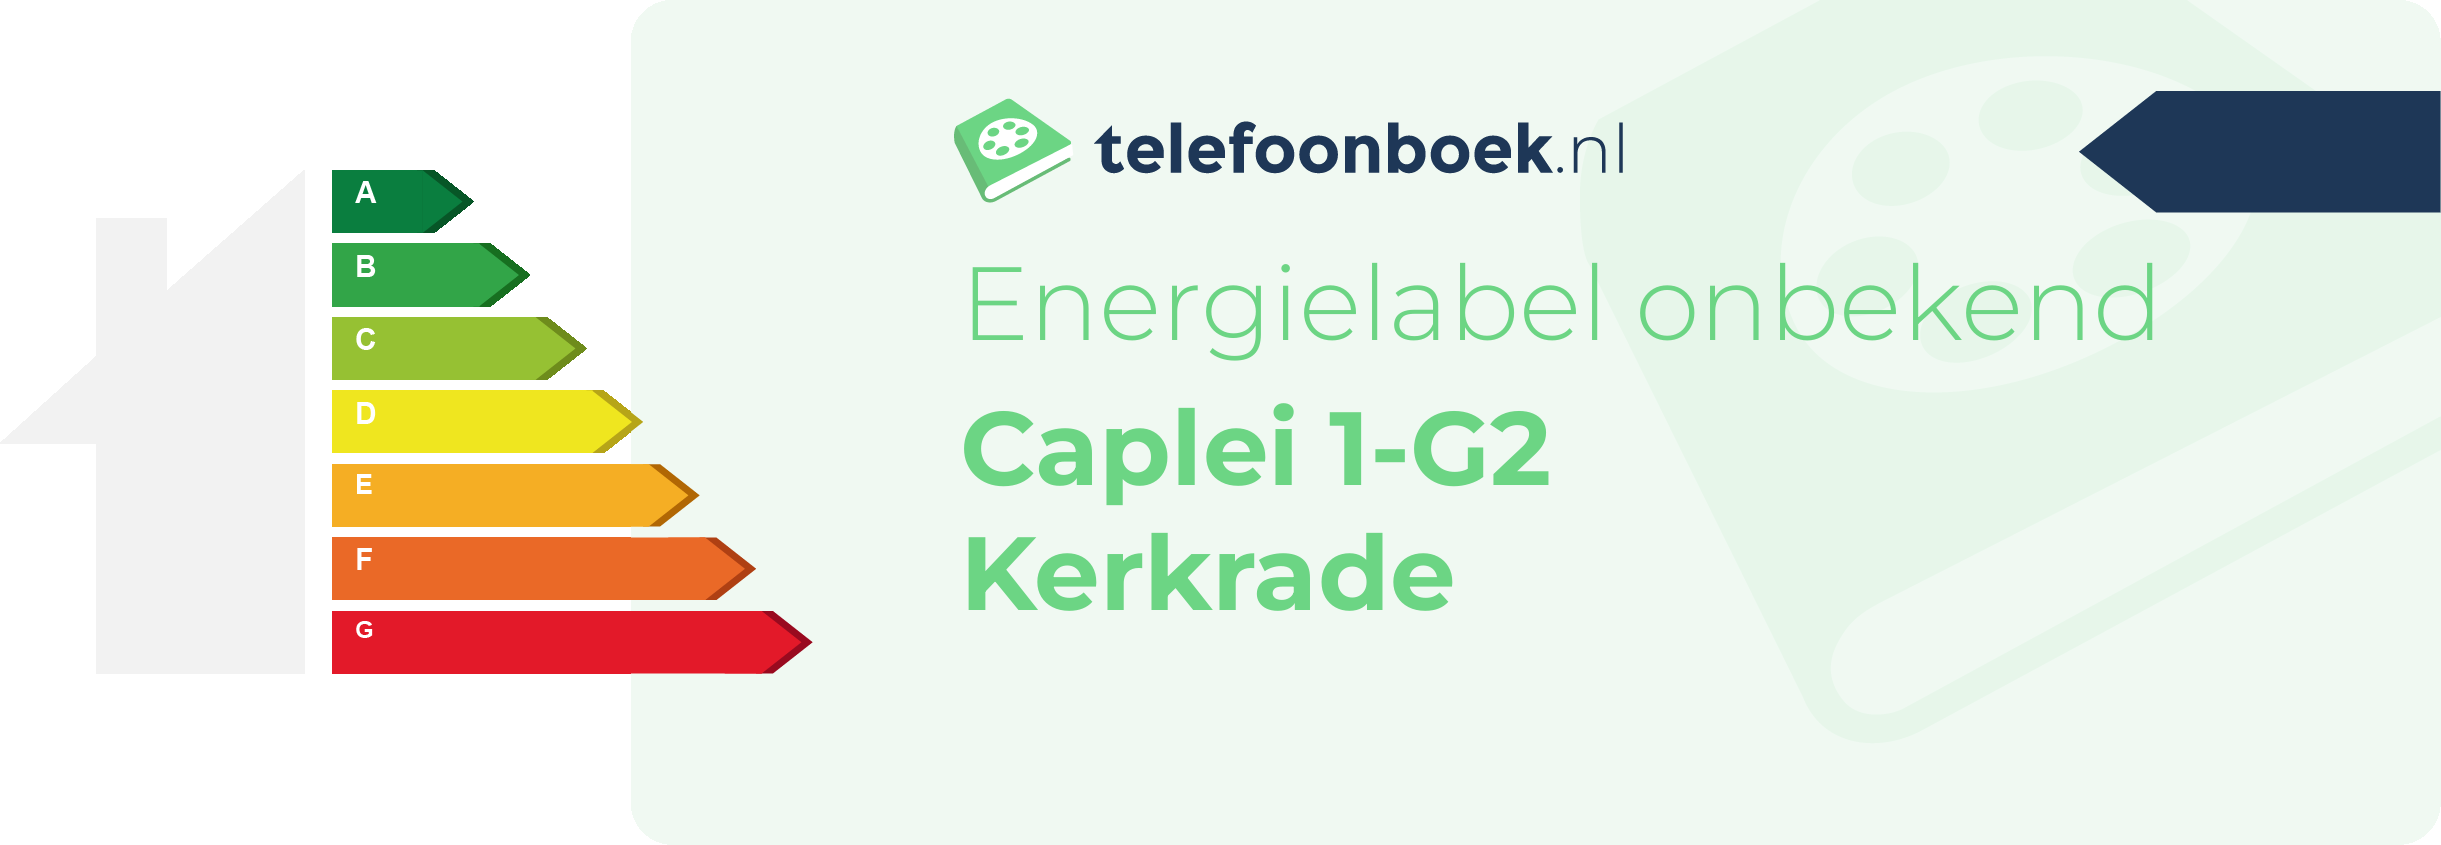 Energielabel Caplei 1-G2 Kerkrade